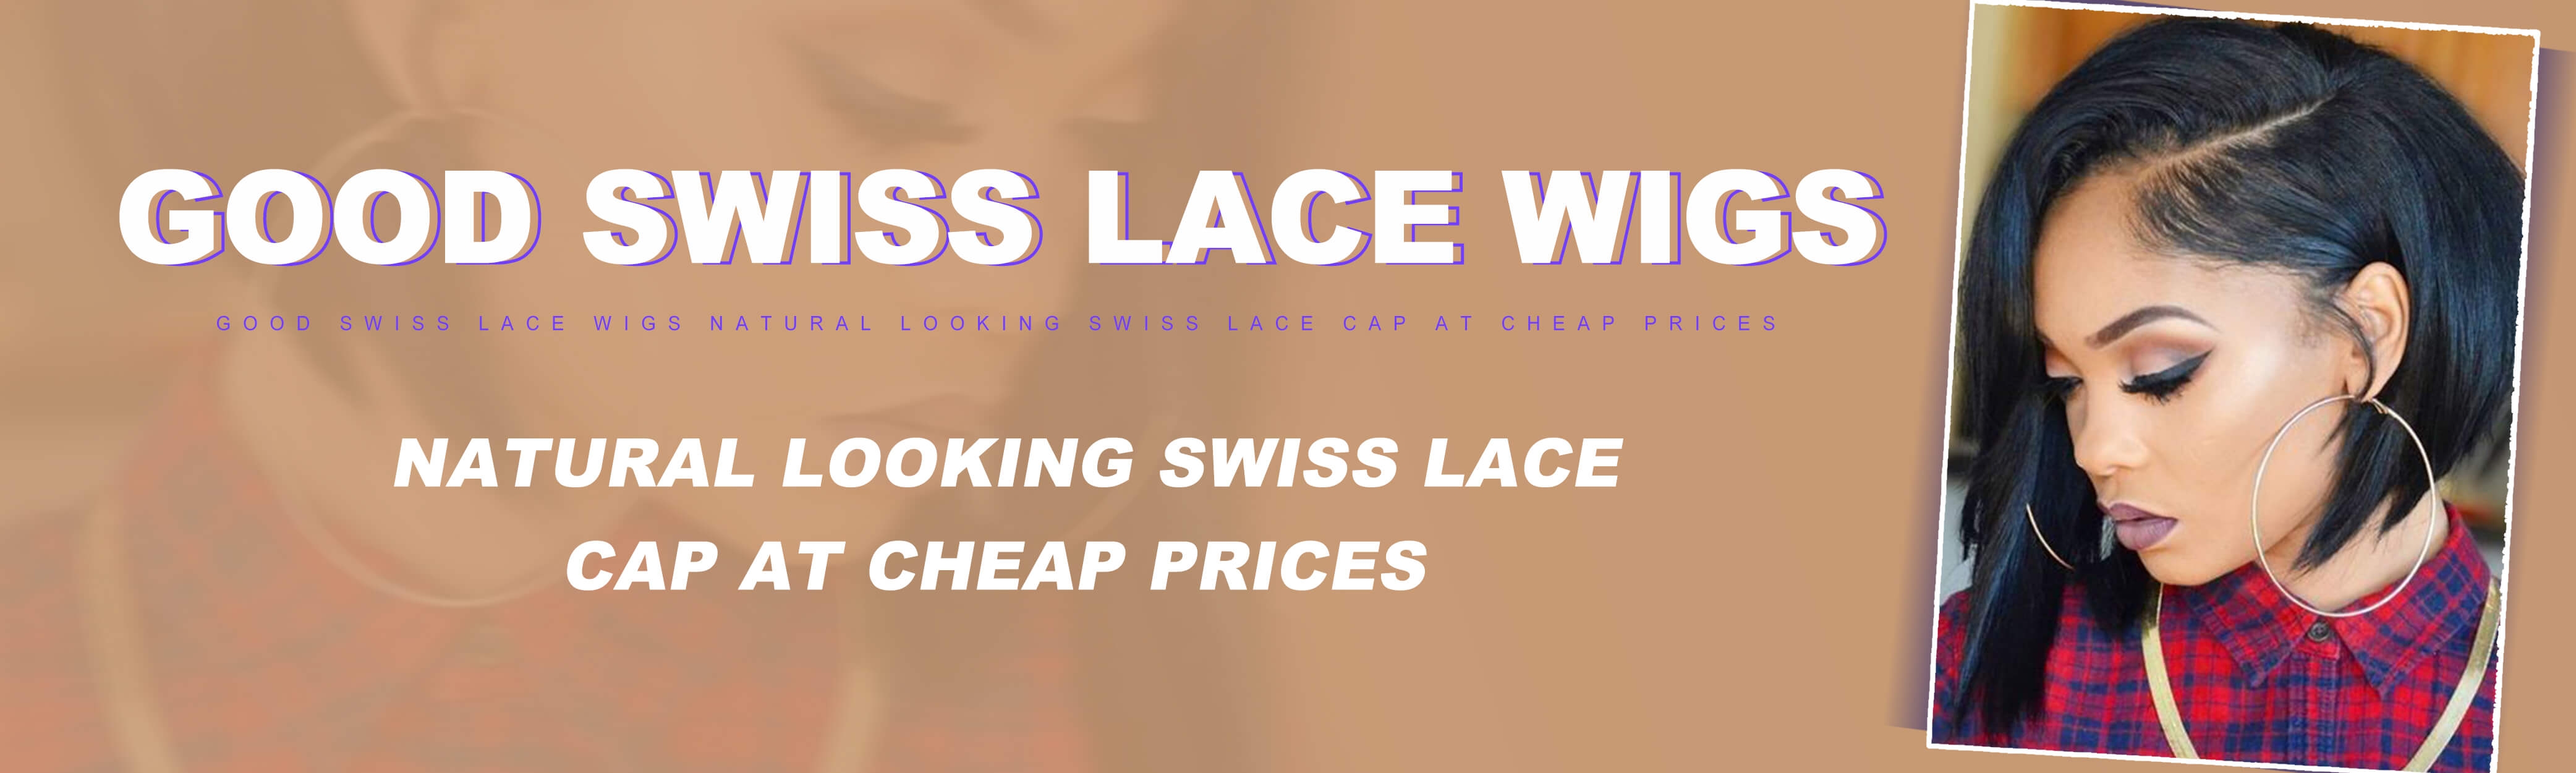 Swiss lace wig